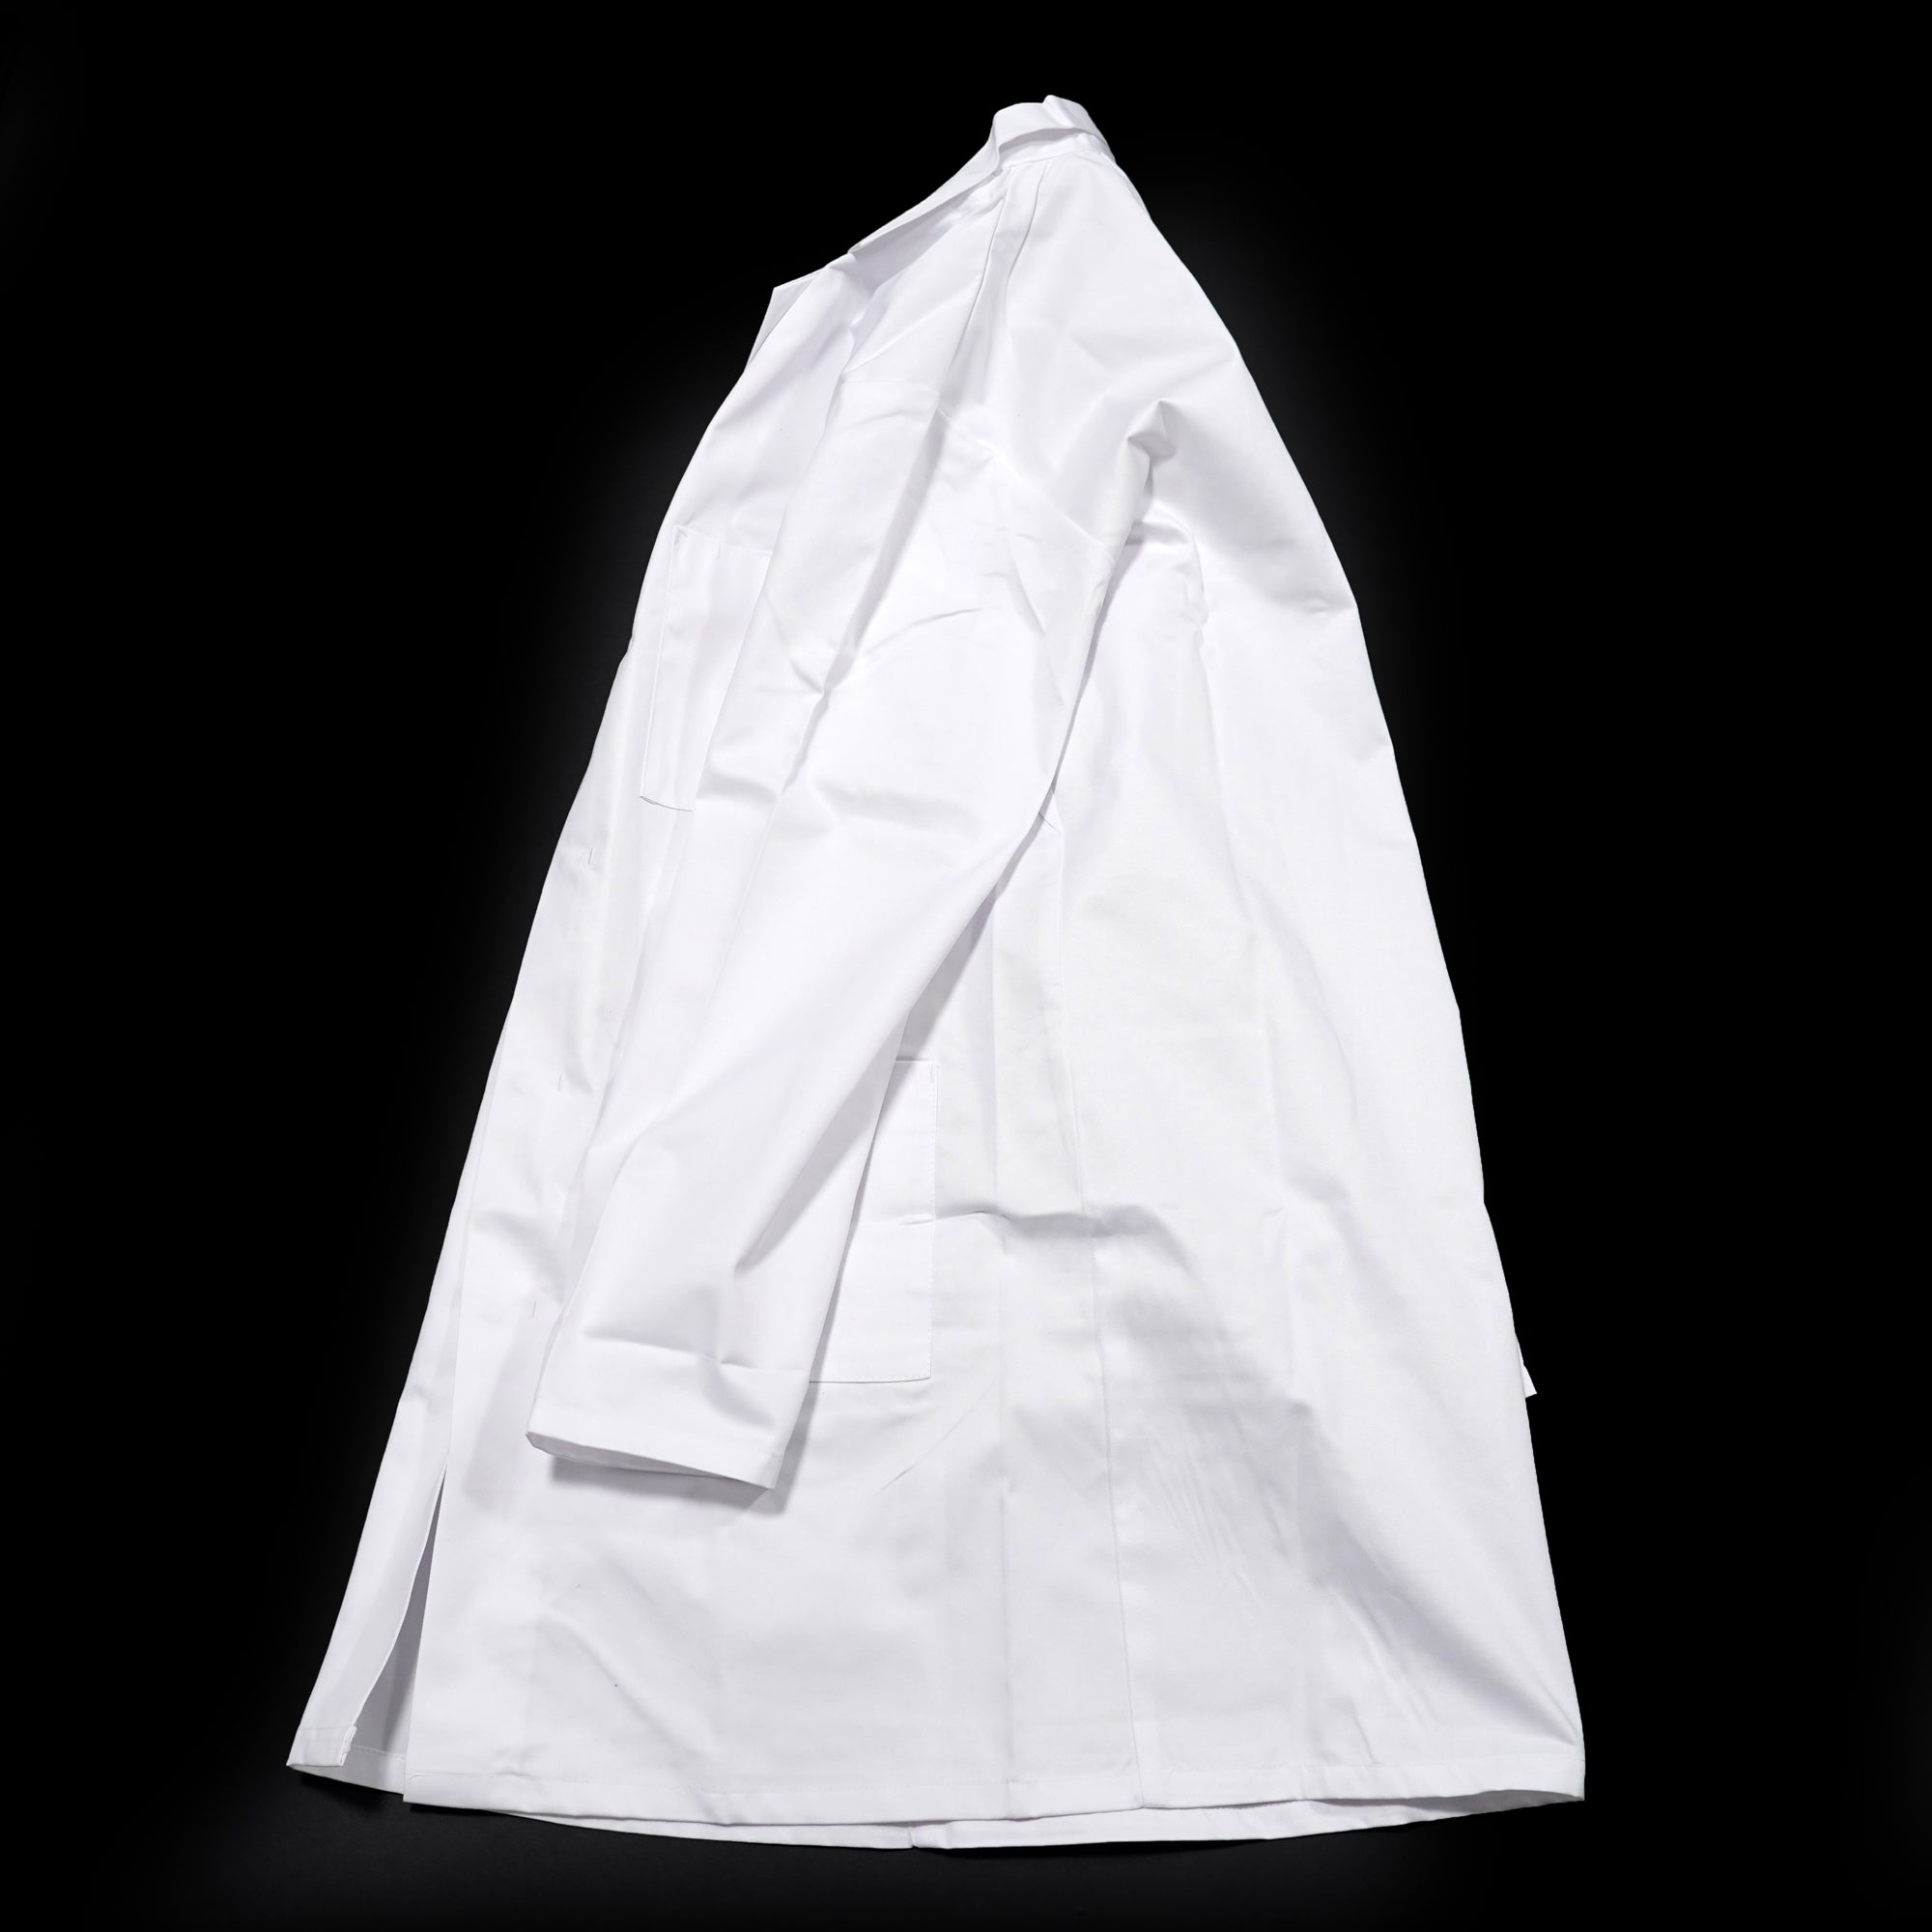 NO:2852 | Name:Standard Coat | Color:white | 【PORTWEST】【EIA】-PORTWEST-ADDICTION FUKUOKA